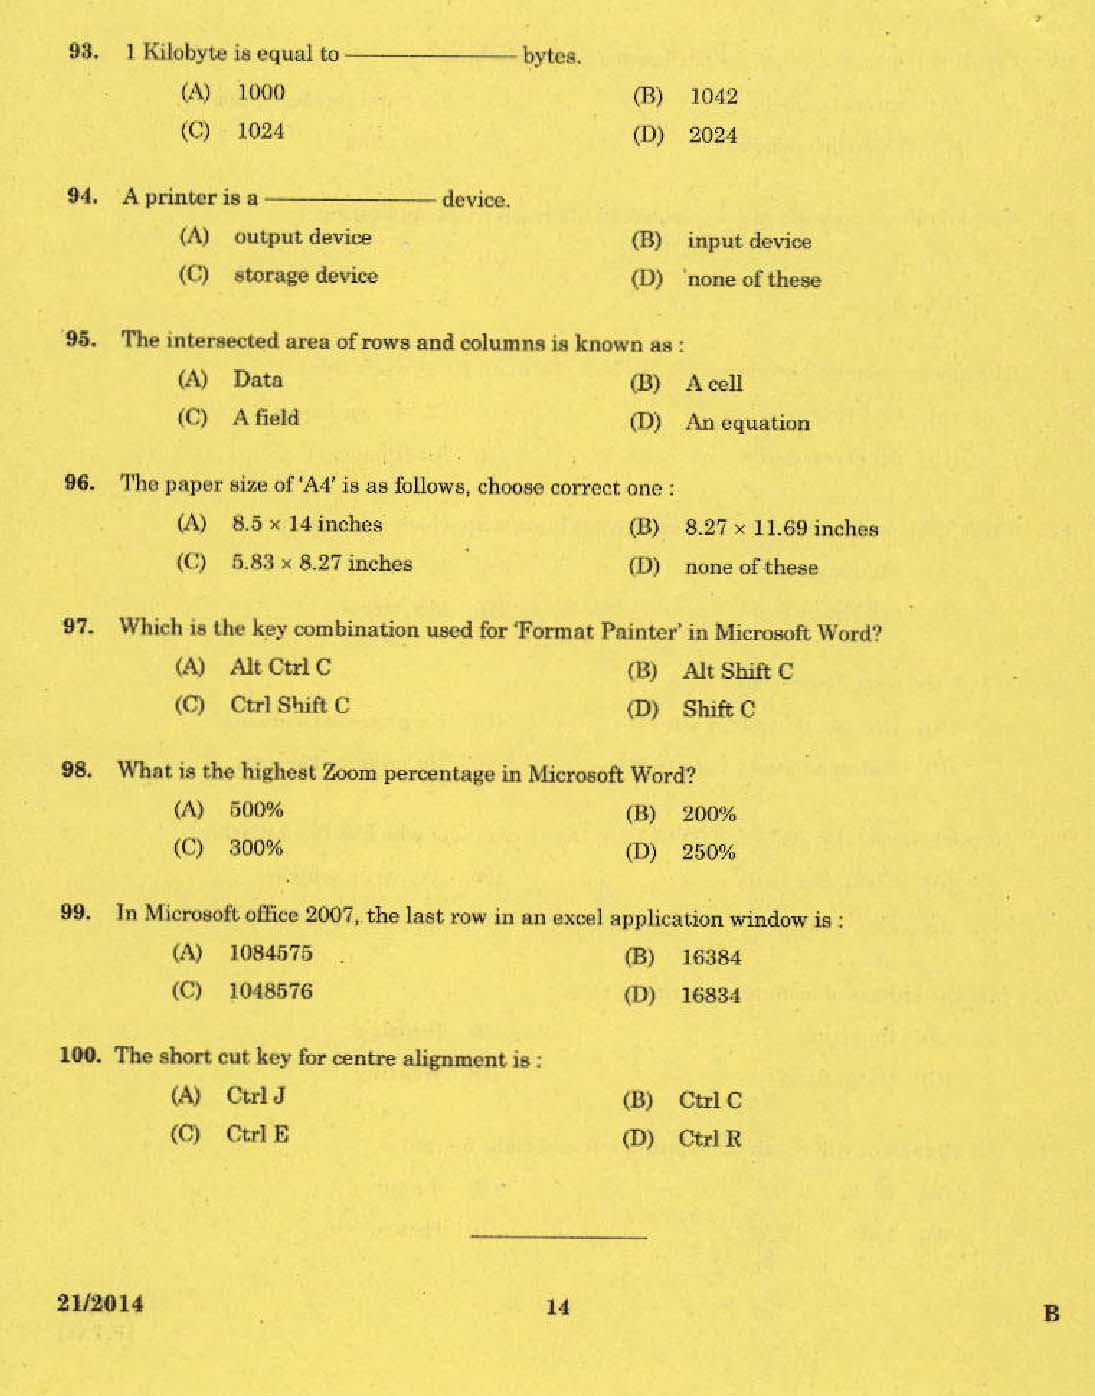 Kerala PSC Stenographer Grade II Exam 2014 Question Paper Code 212014 12